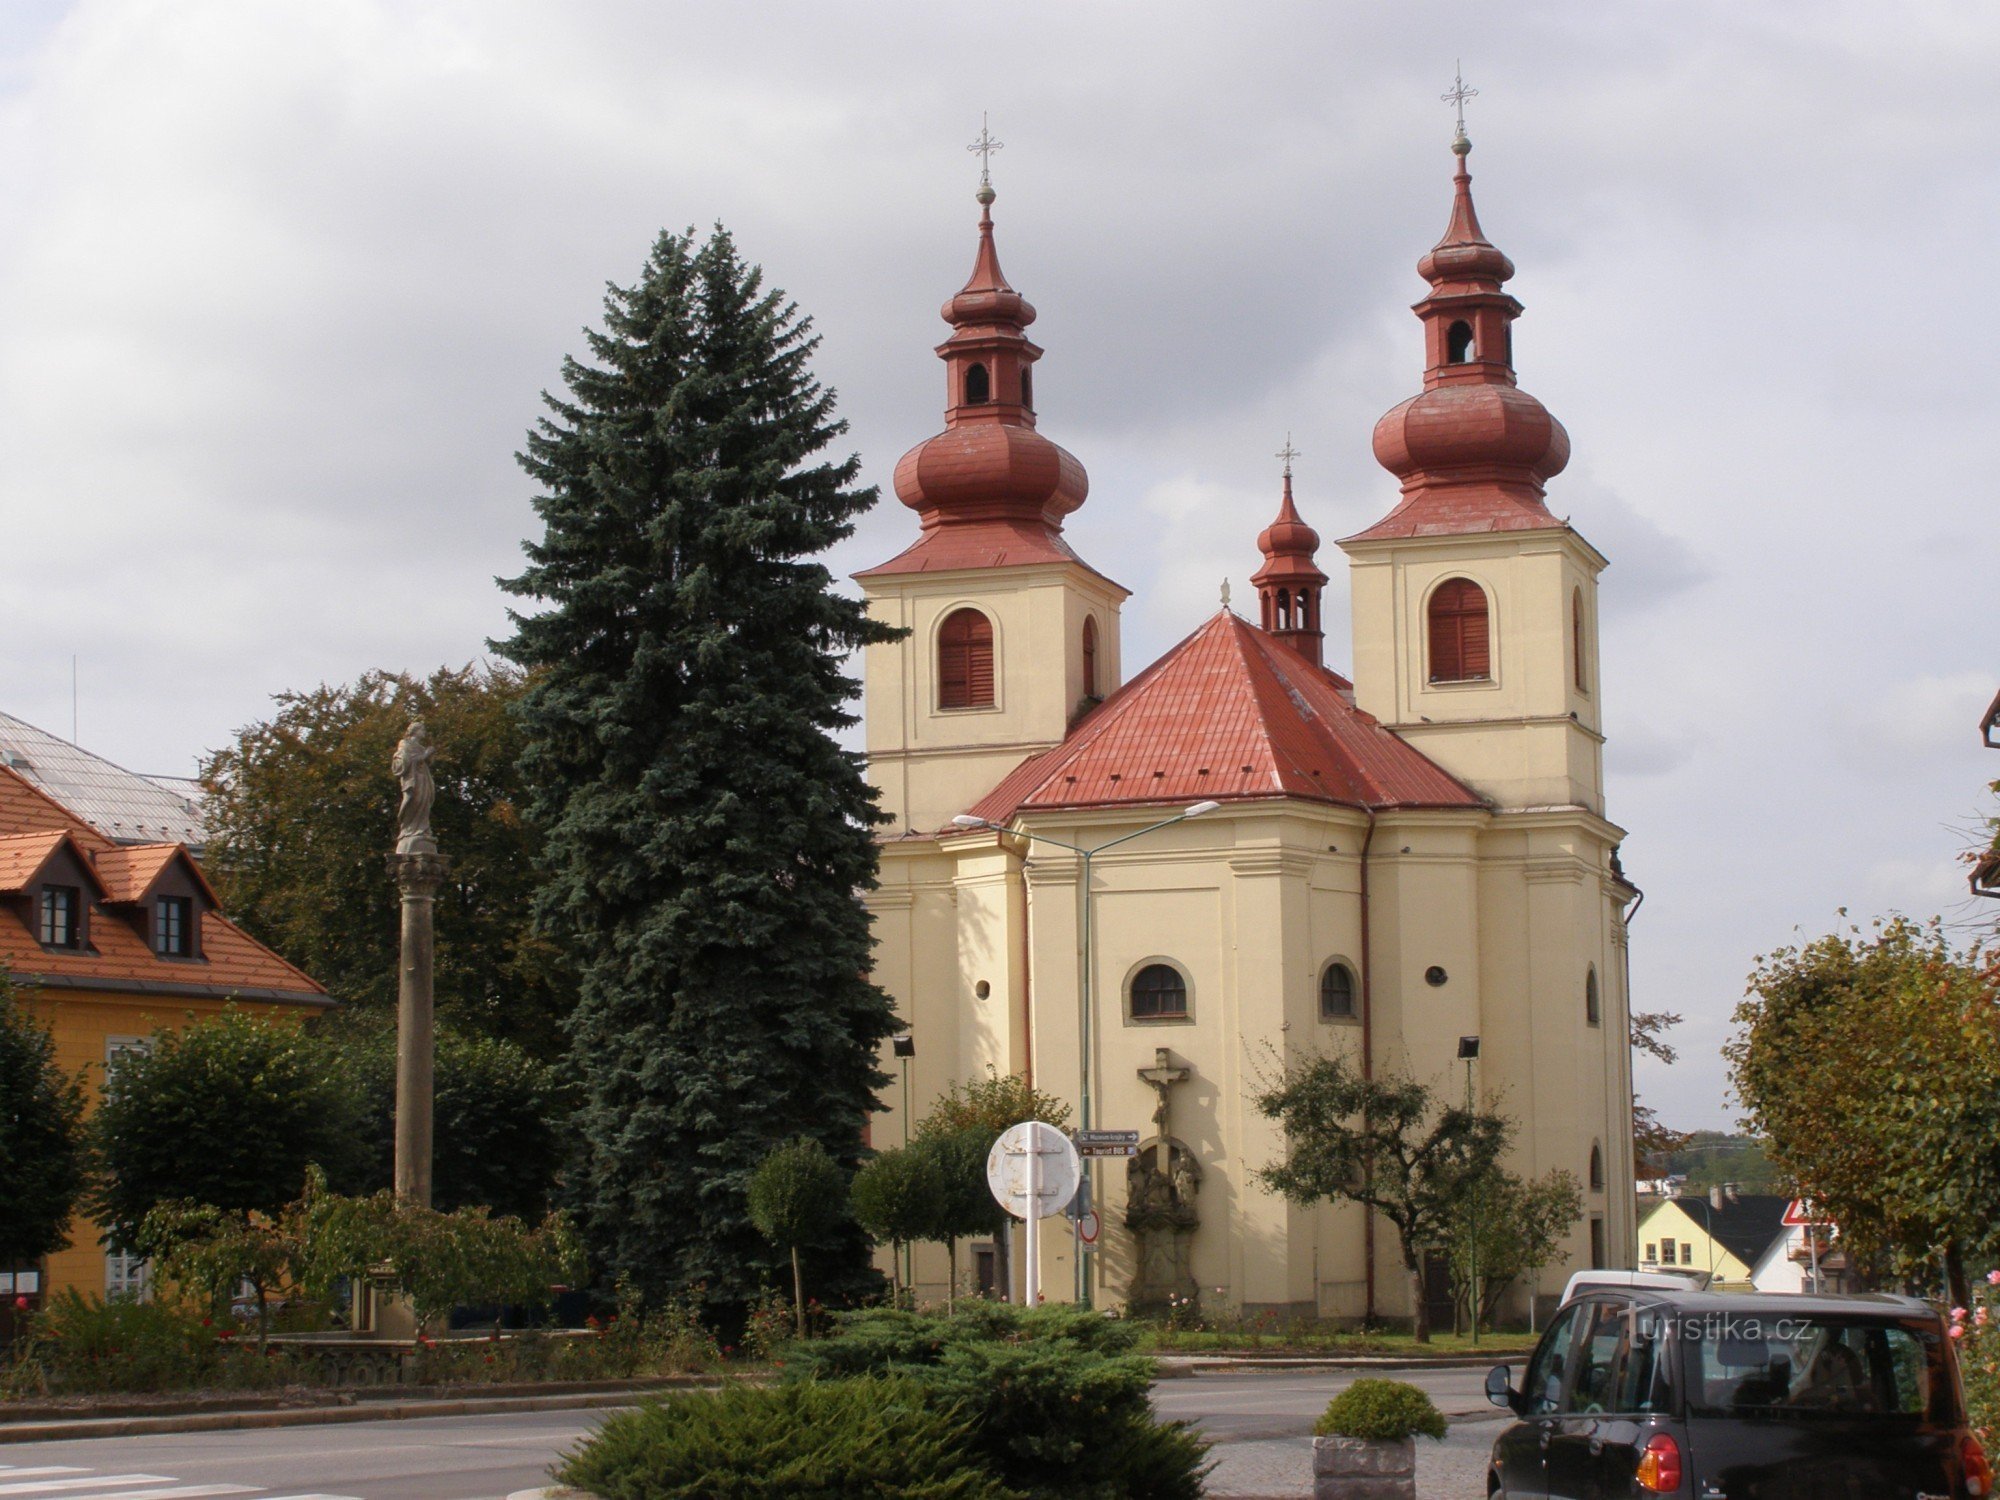 Vamberk - Kościół św. Prokopiusz